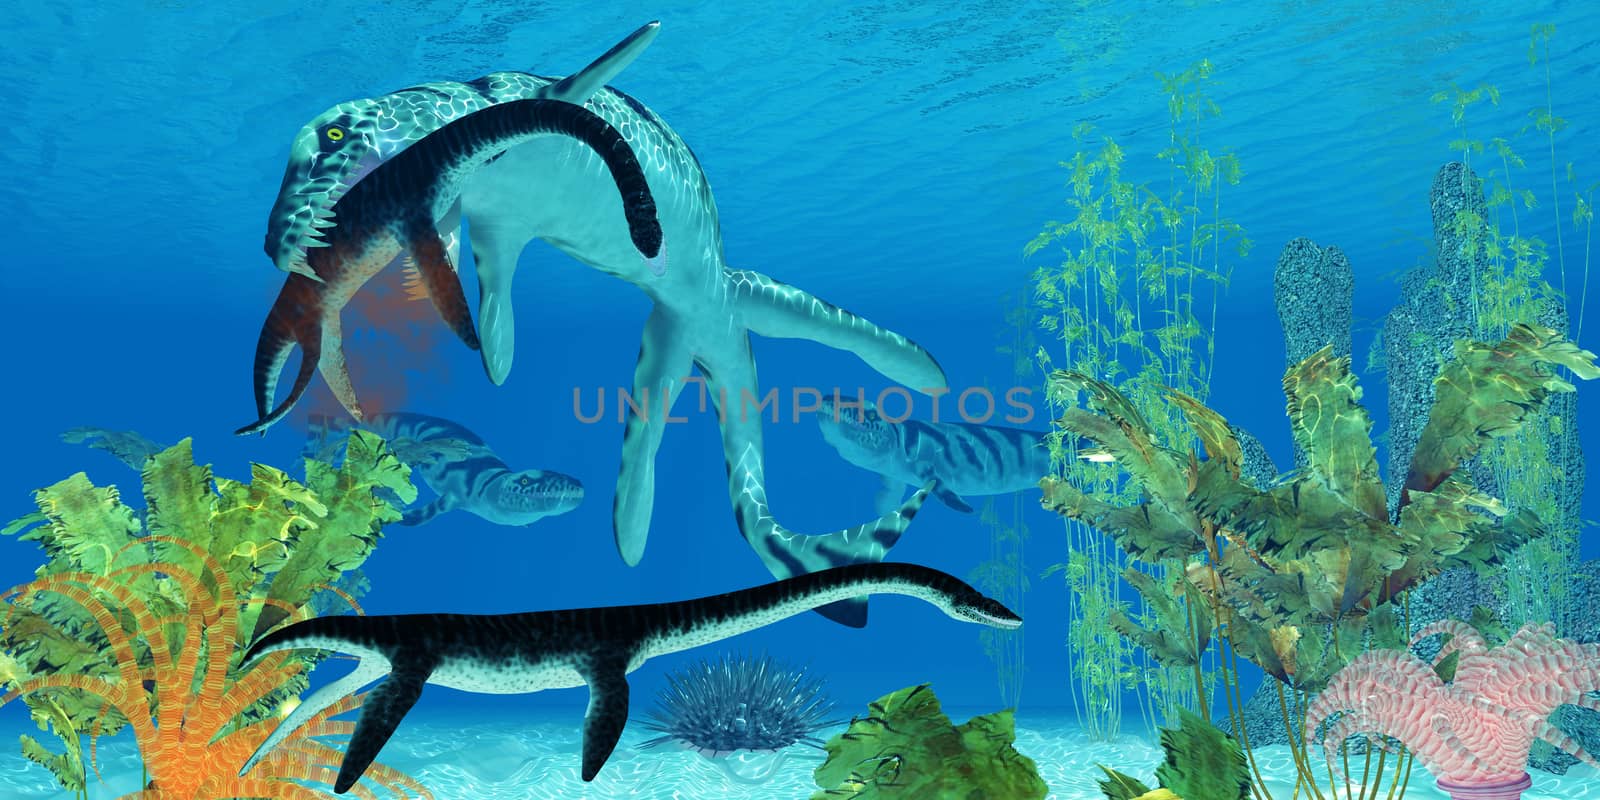 A Dakosaurus attacks a small Plesiosaurus in the clear waters of a prehistoric ocean.